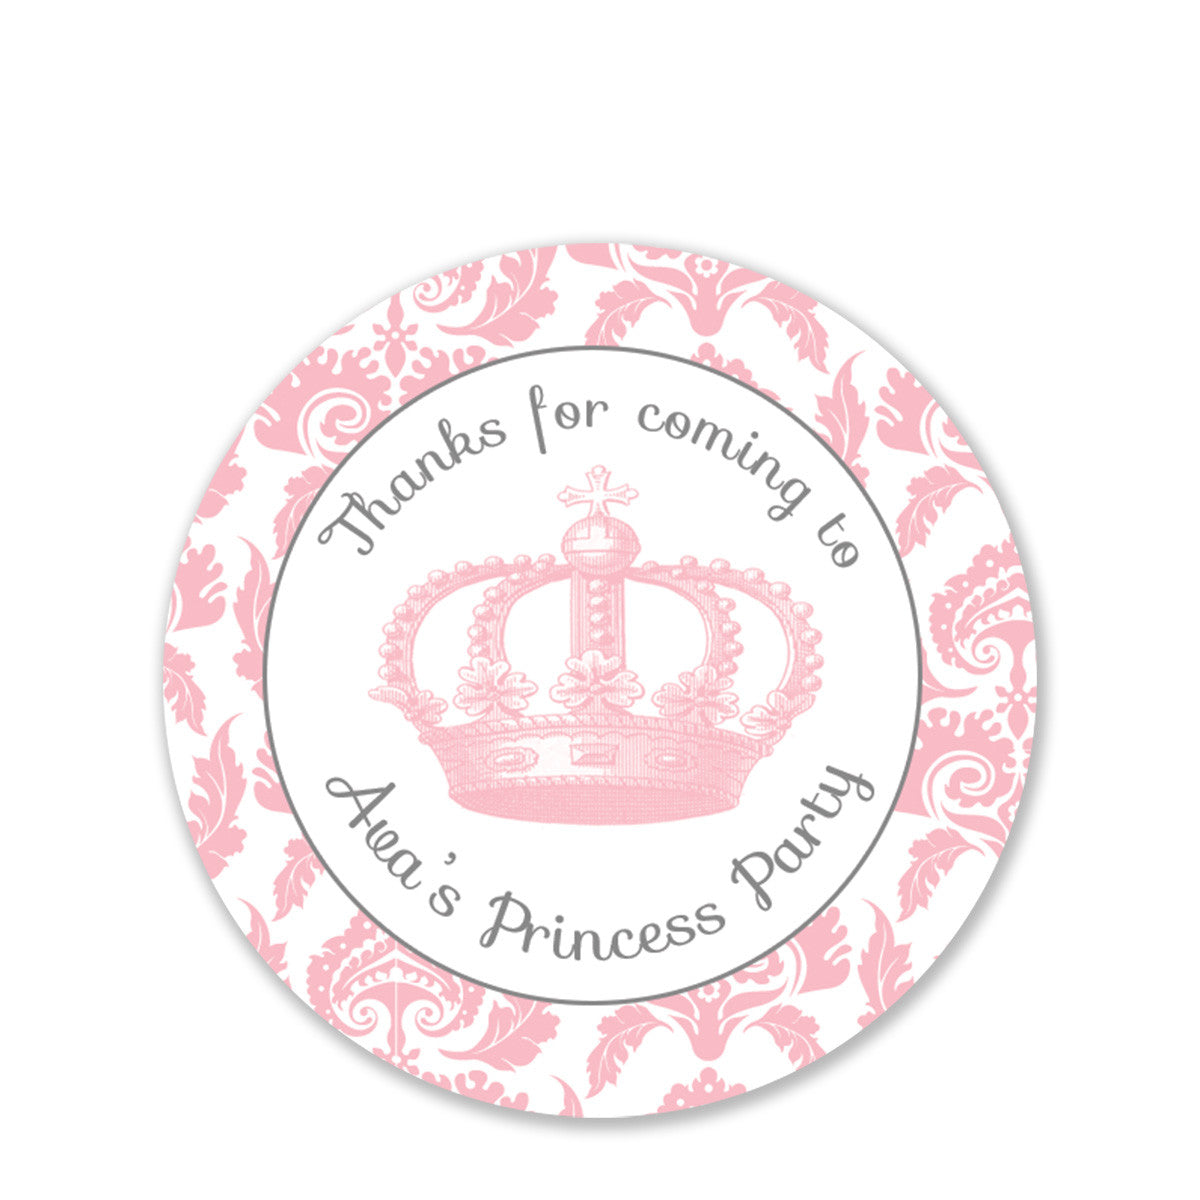 Vintage Princess Party Favor Stickers, Round